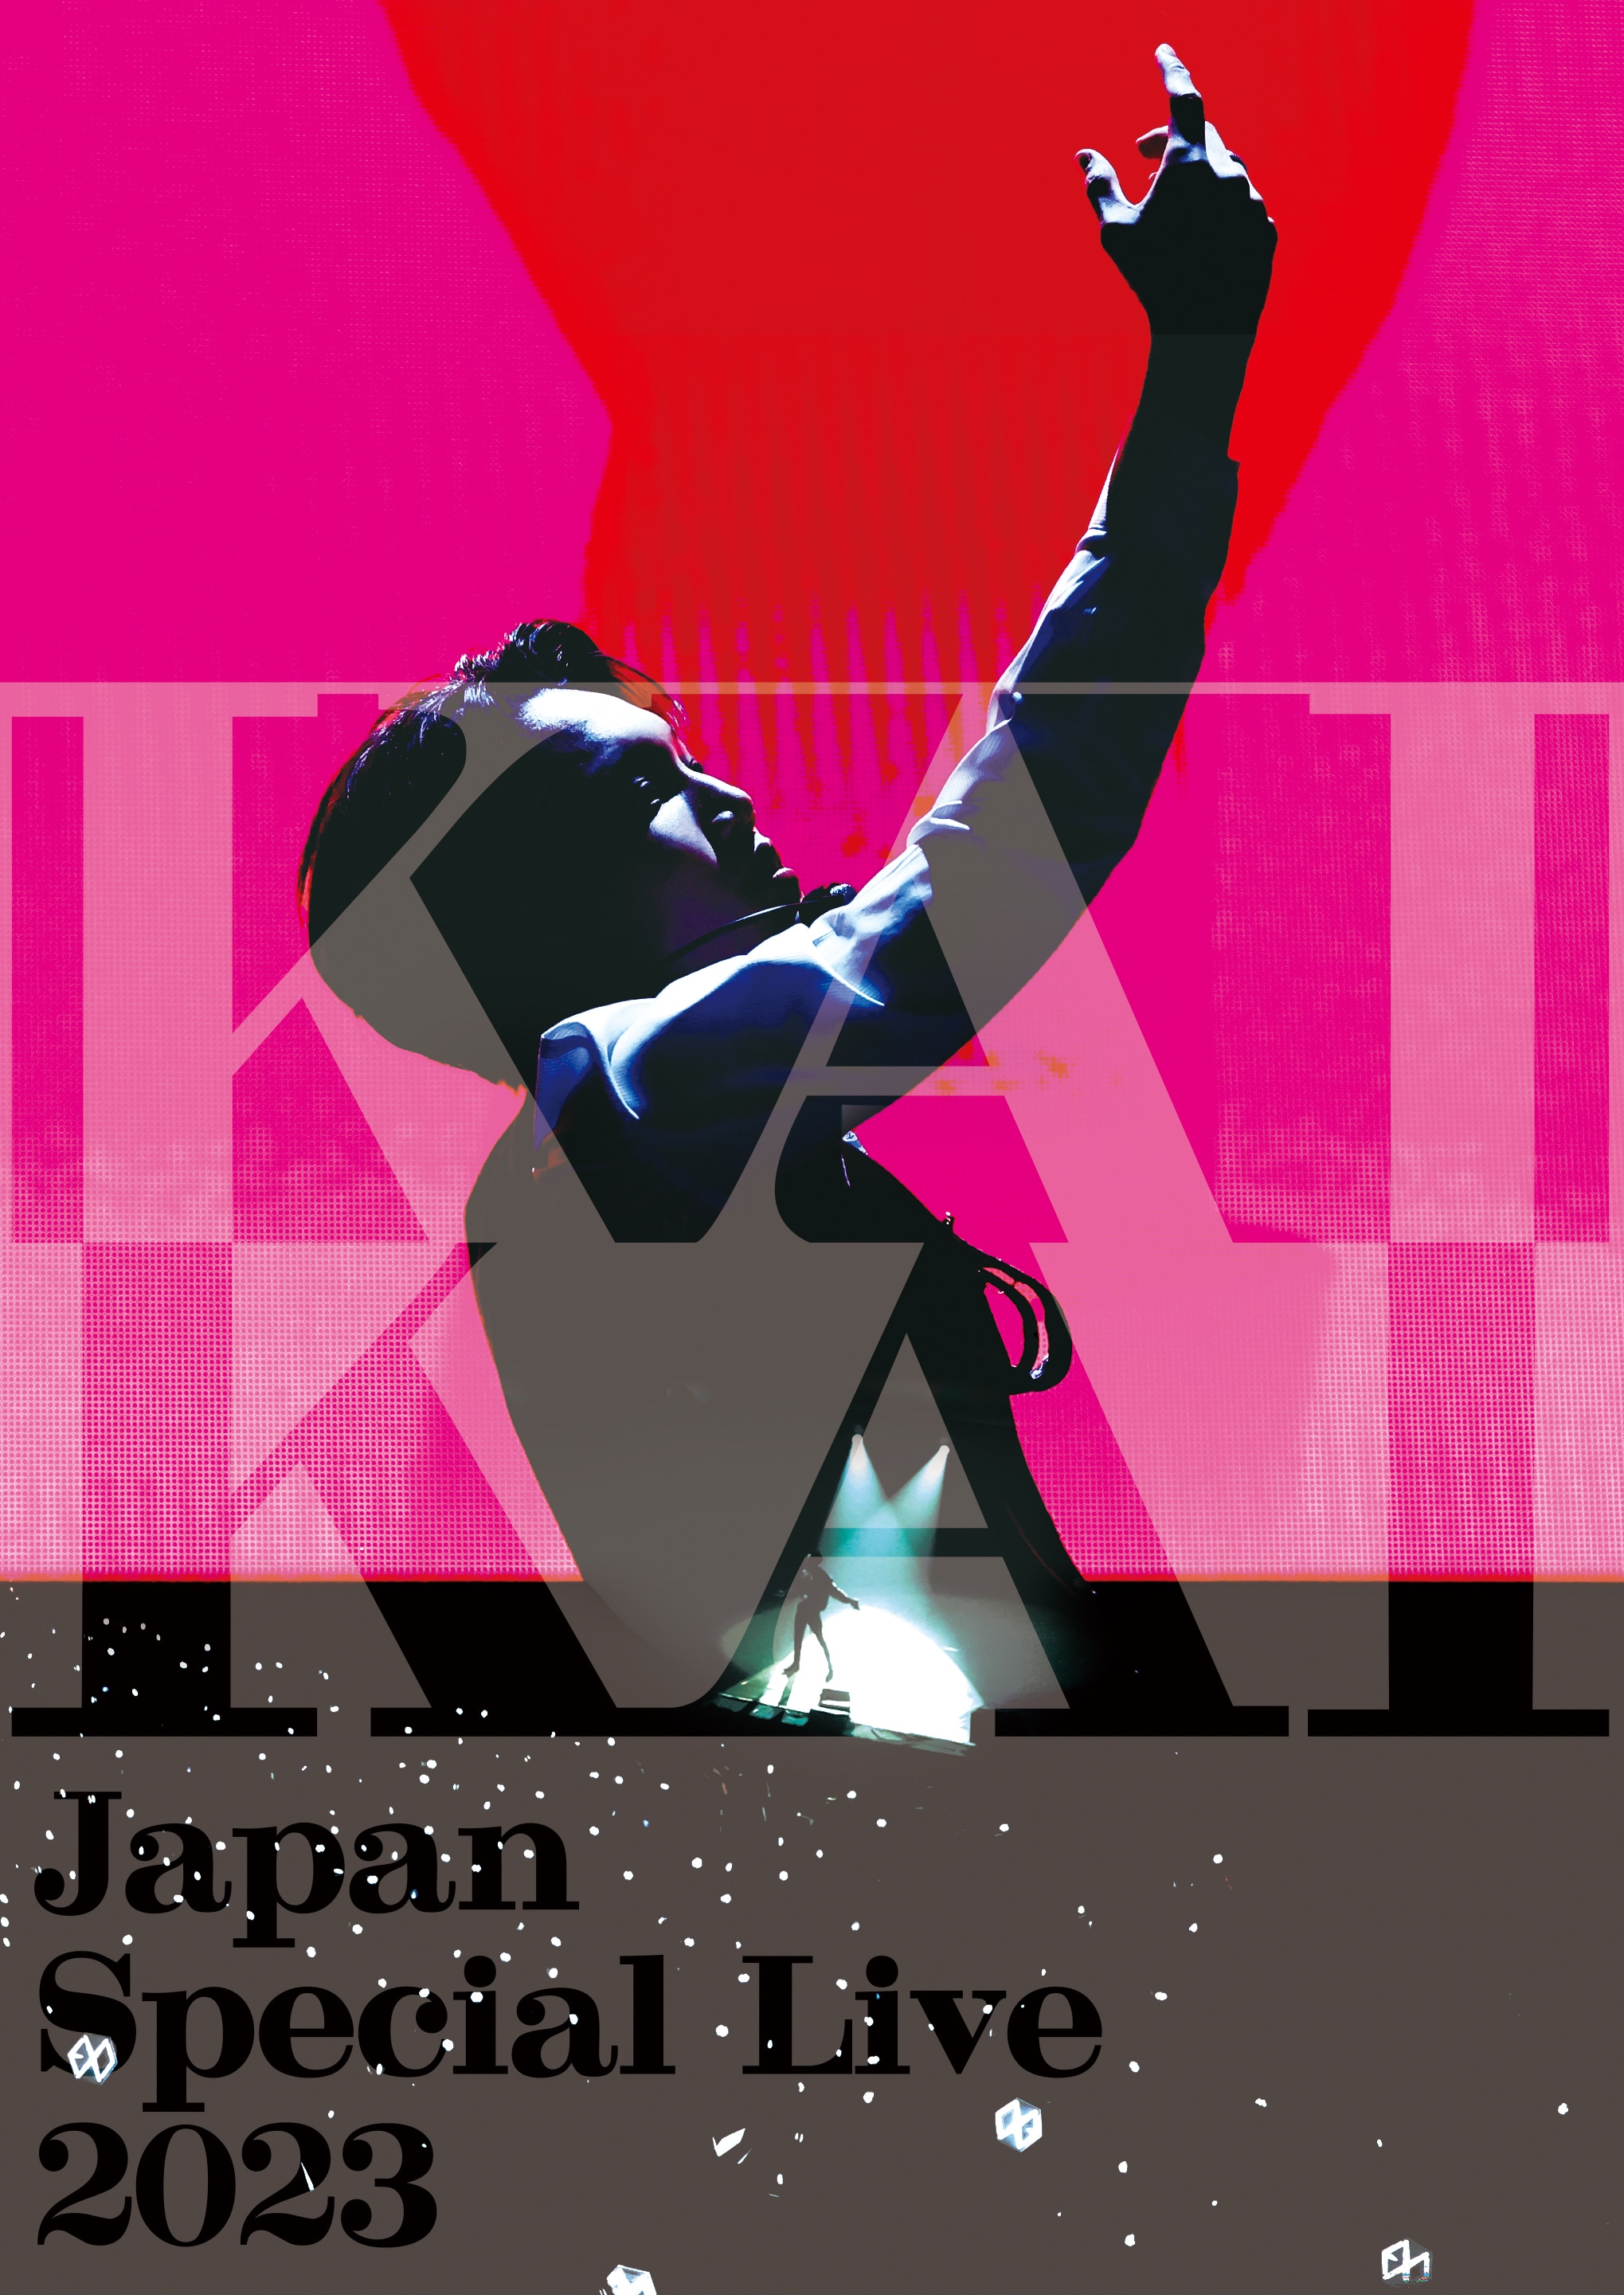 KAI Japan Special Live 2023＜初回生産限定盤＞ | エイベックス 